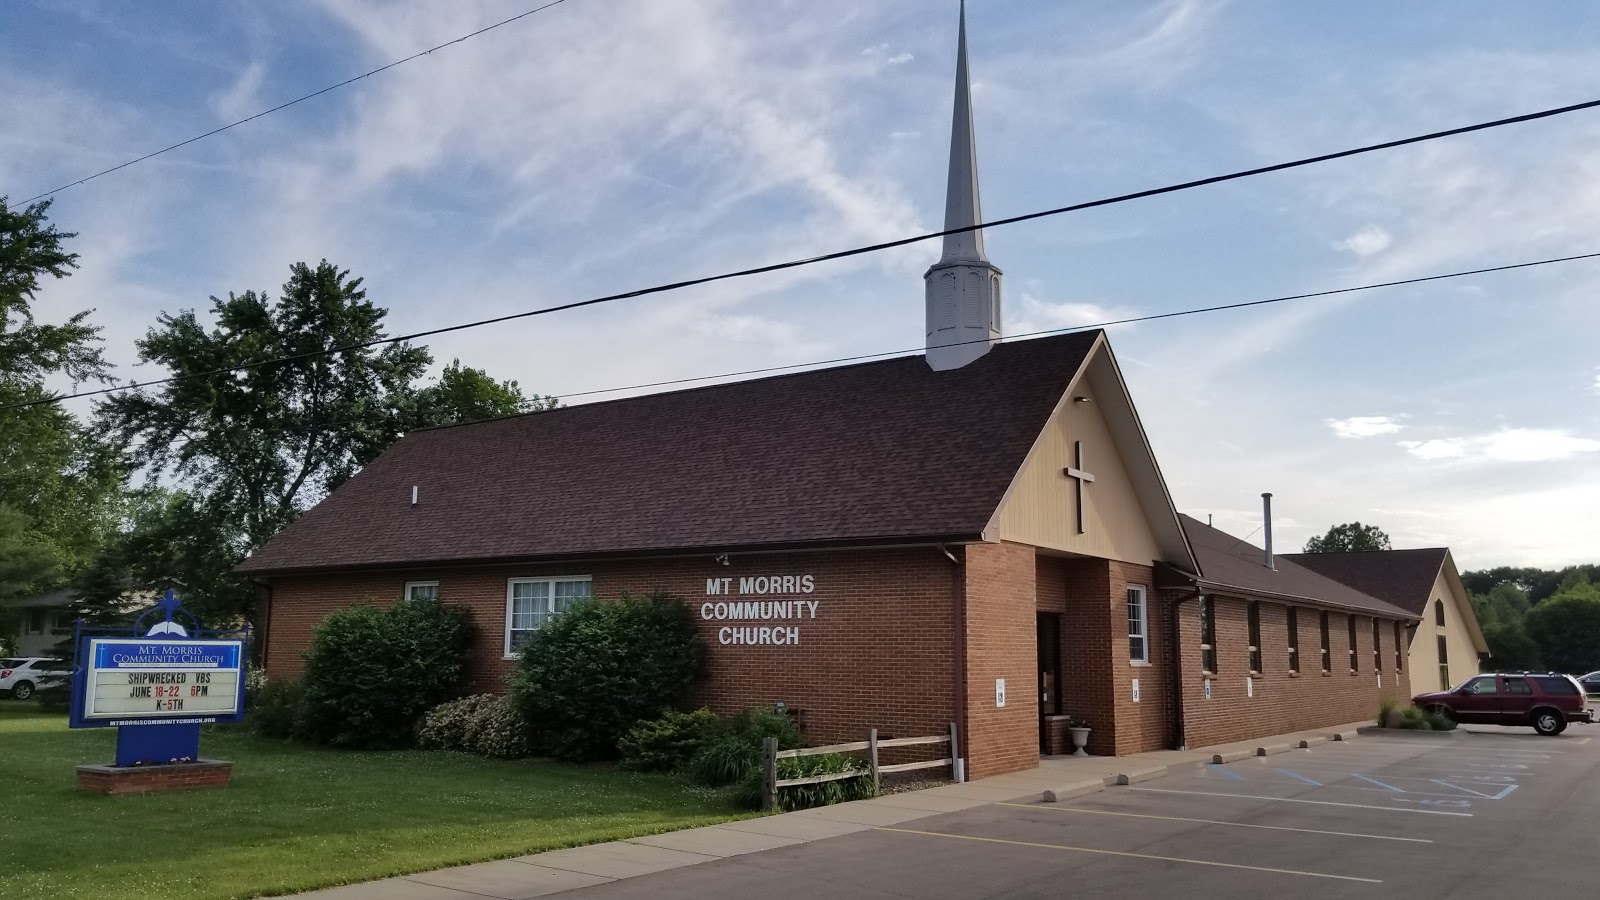 Alcoholics For Christ - Mt Morris Community Church